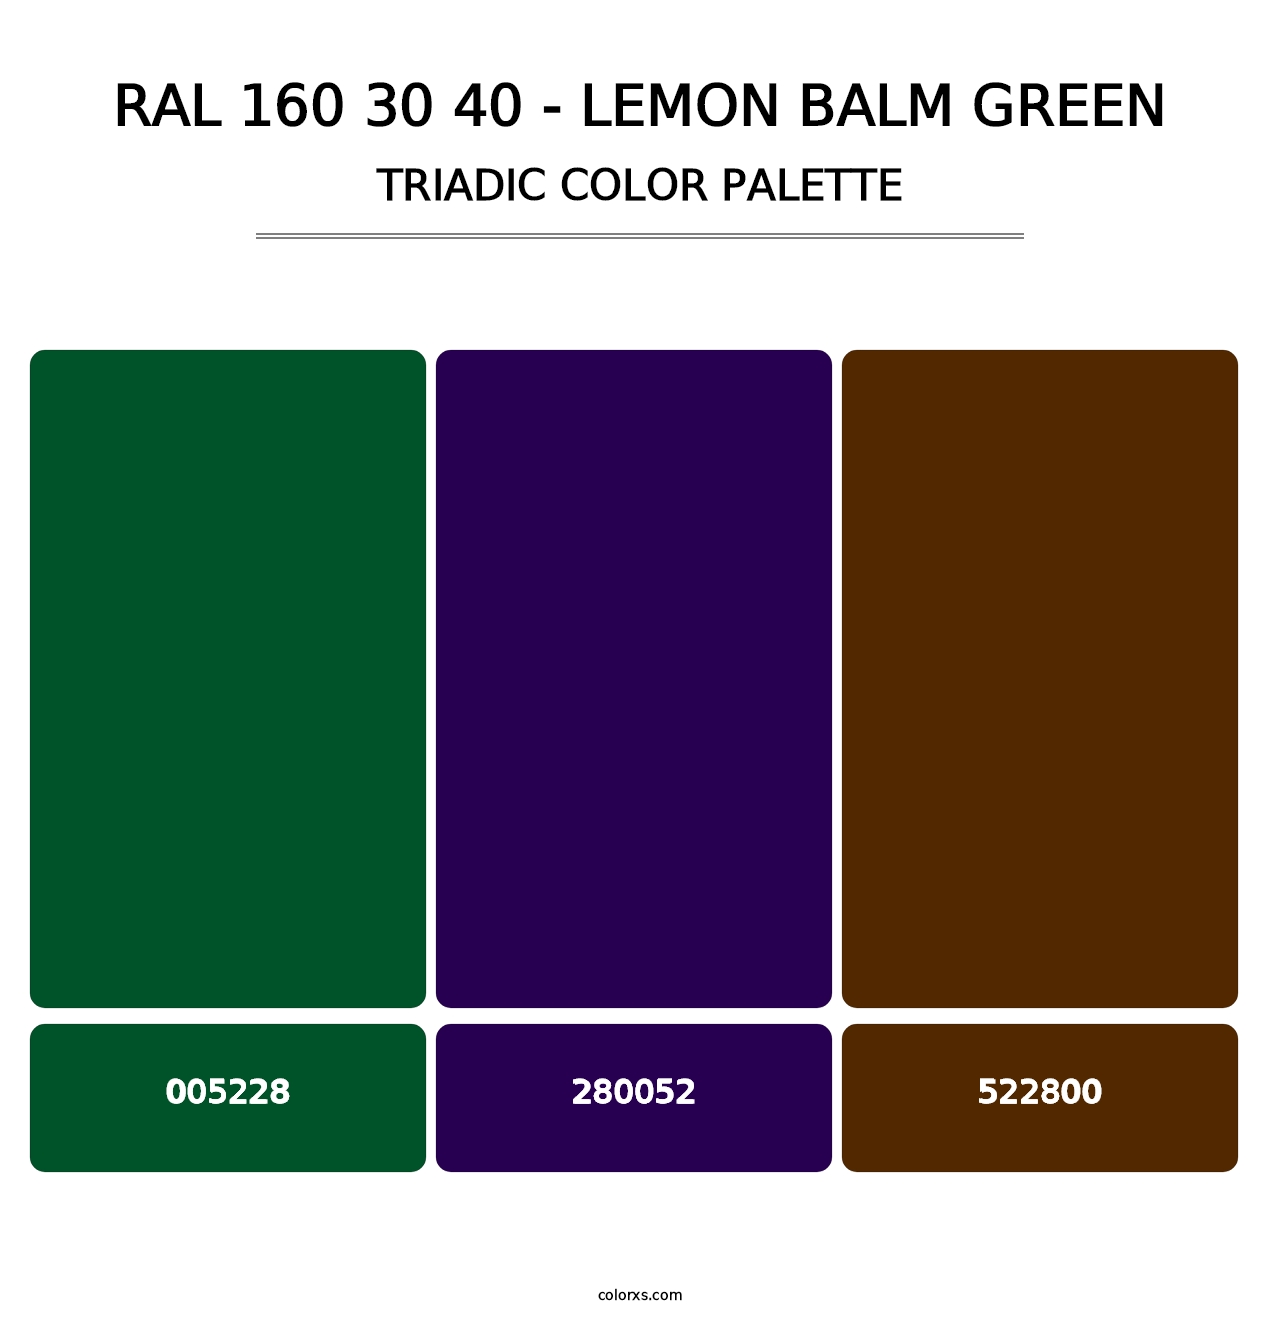 RAL 160 30 40 - Lemon Balm Green - Triadic Color Palette